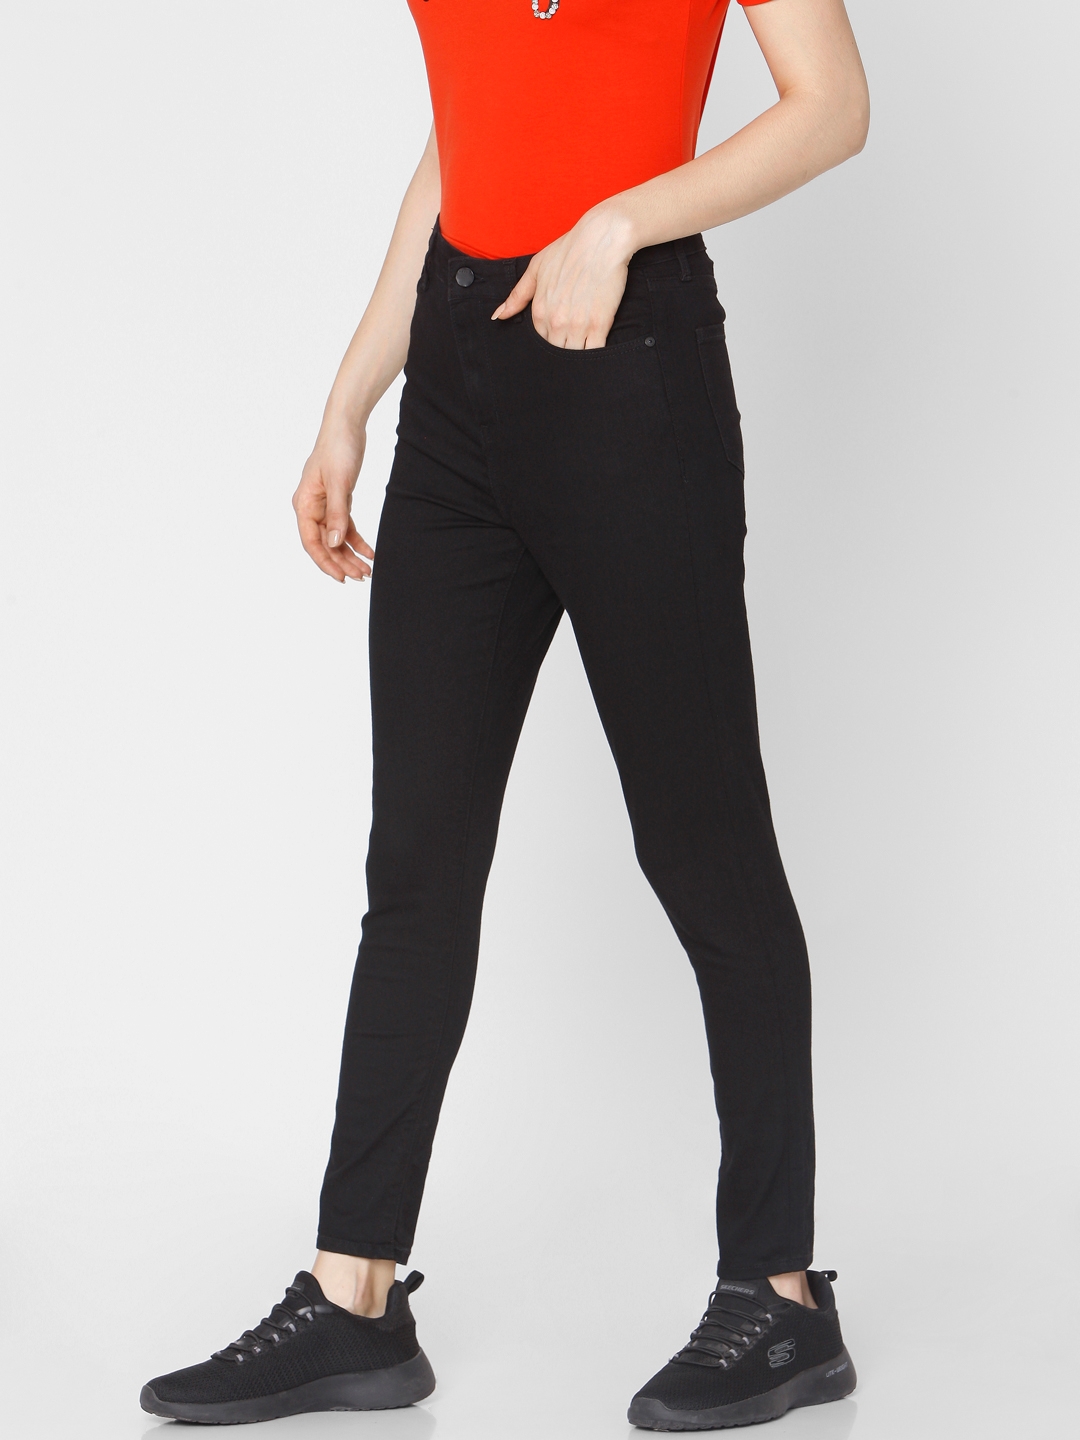 spykar | Women's Black Cotton Solid Slim Jeans 2